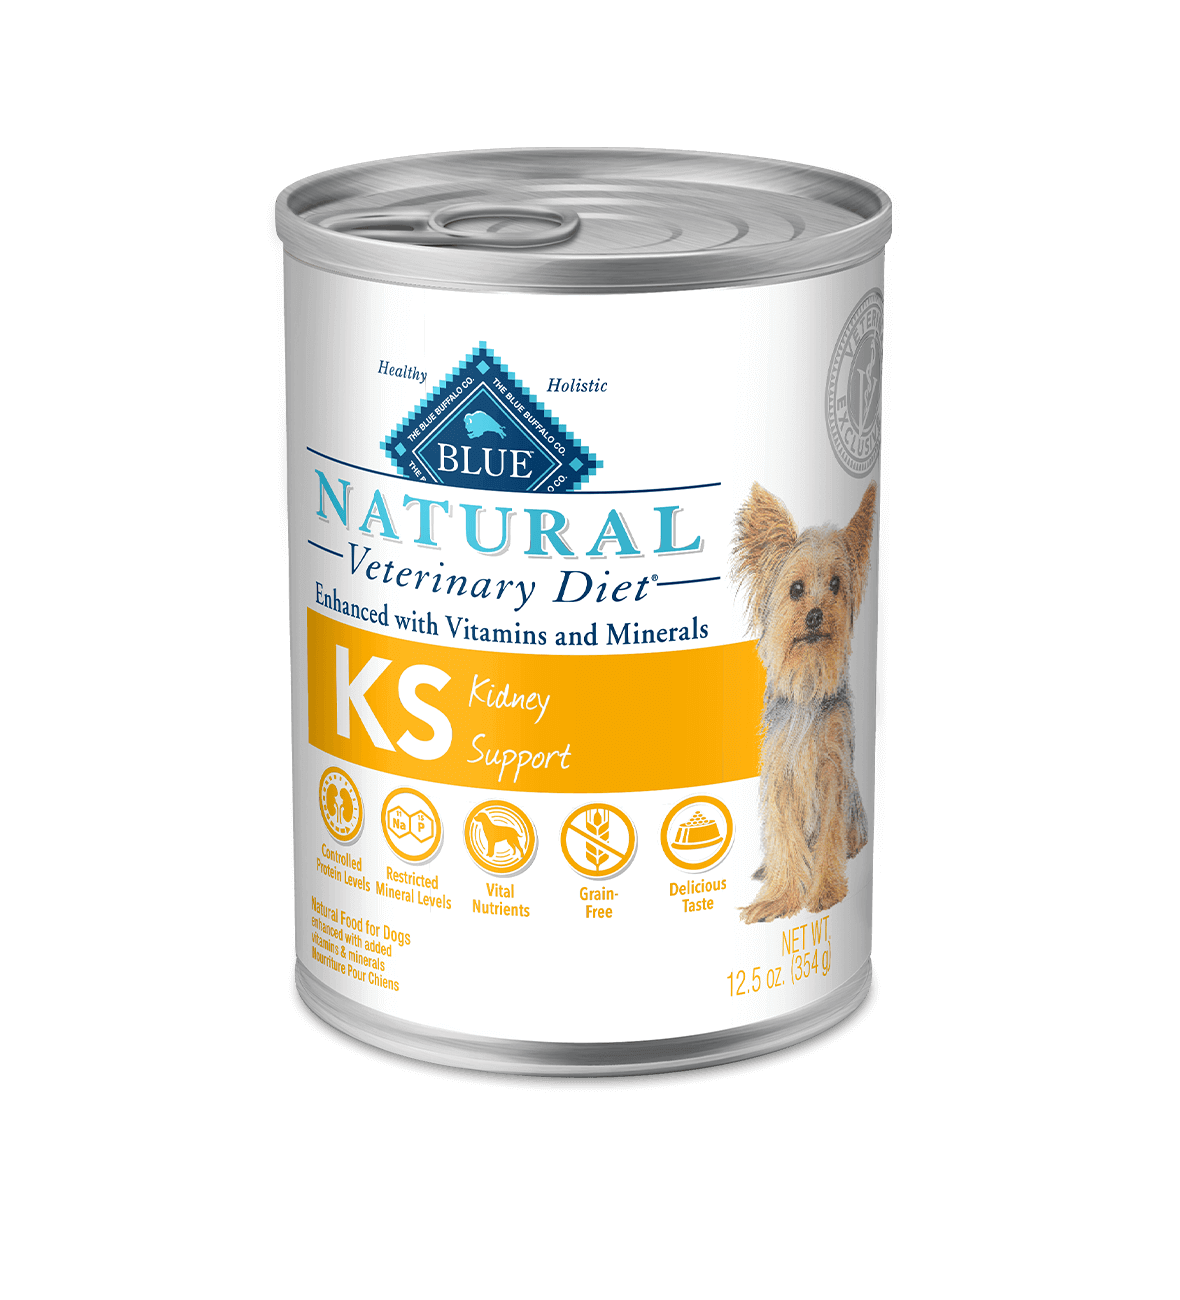 Blue Buffalo BLUE Natural Veterinary Diet KS Kidney Support Wet Dog Food